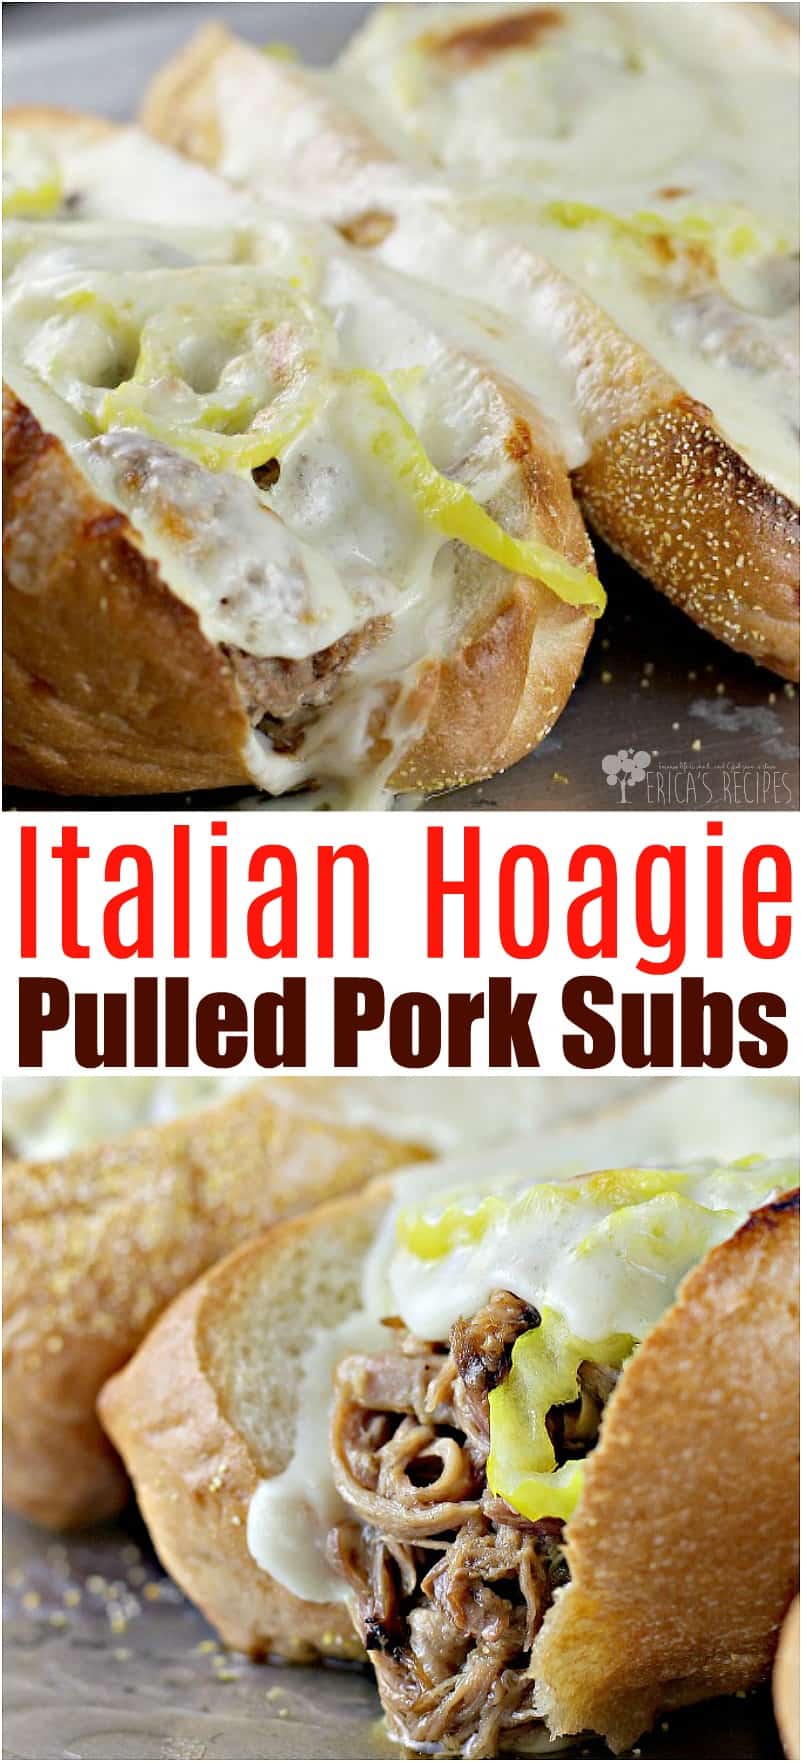 Italian Hoagie Pulled Pork Subs #recipe #pork #food #slowcooker #crockpot